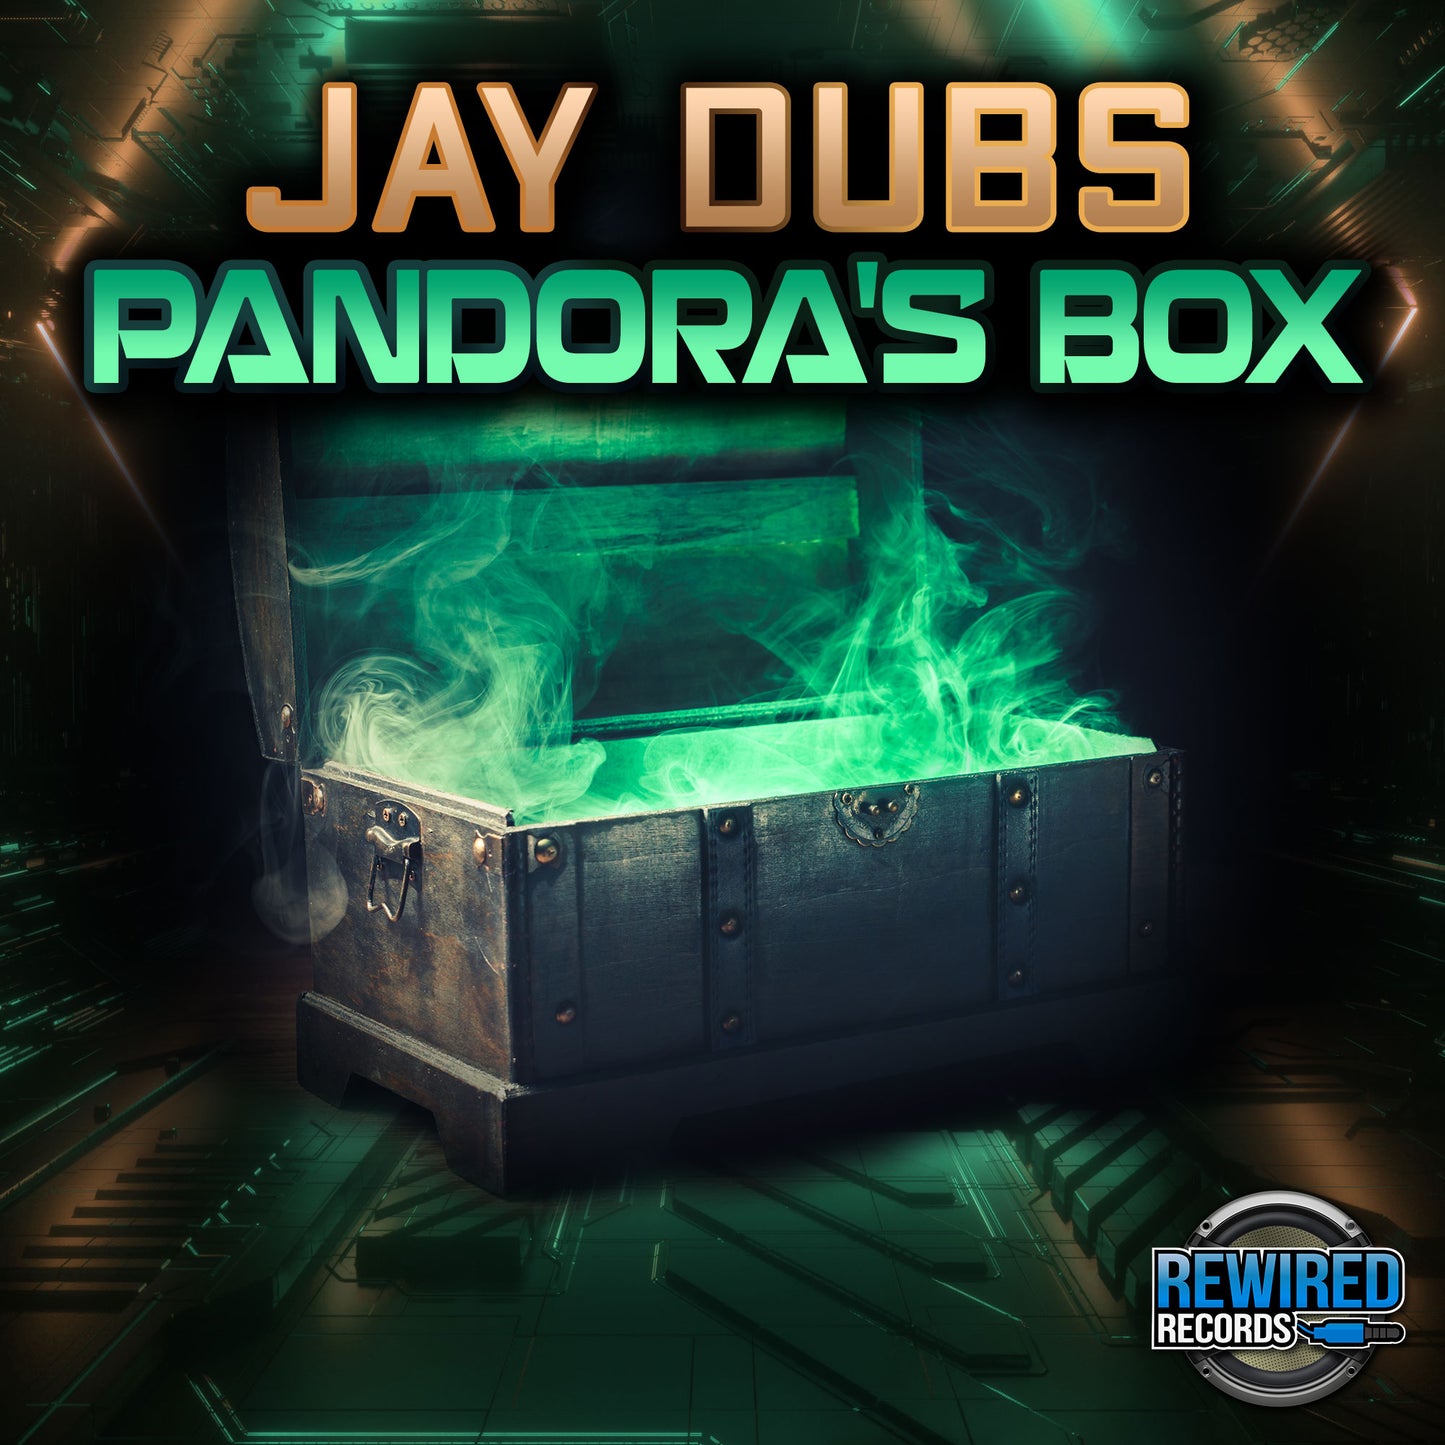 Jay Dubs - Pandora's Box - Rewired Records